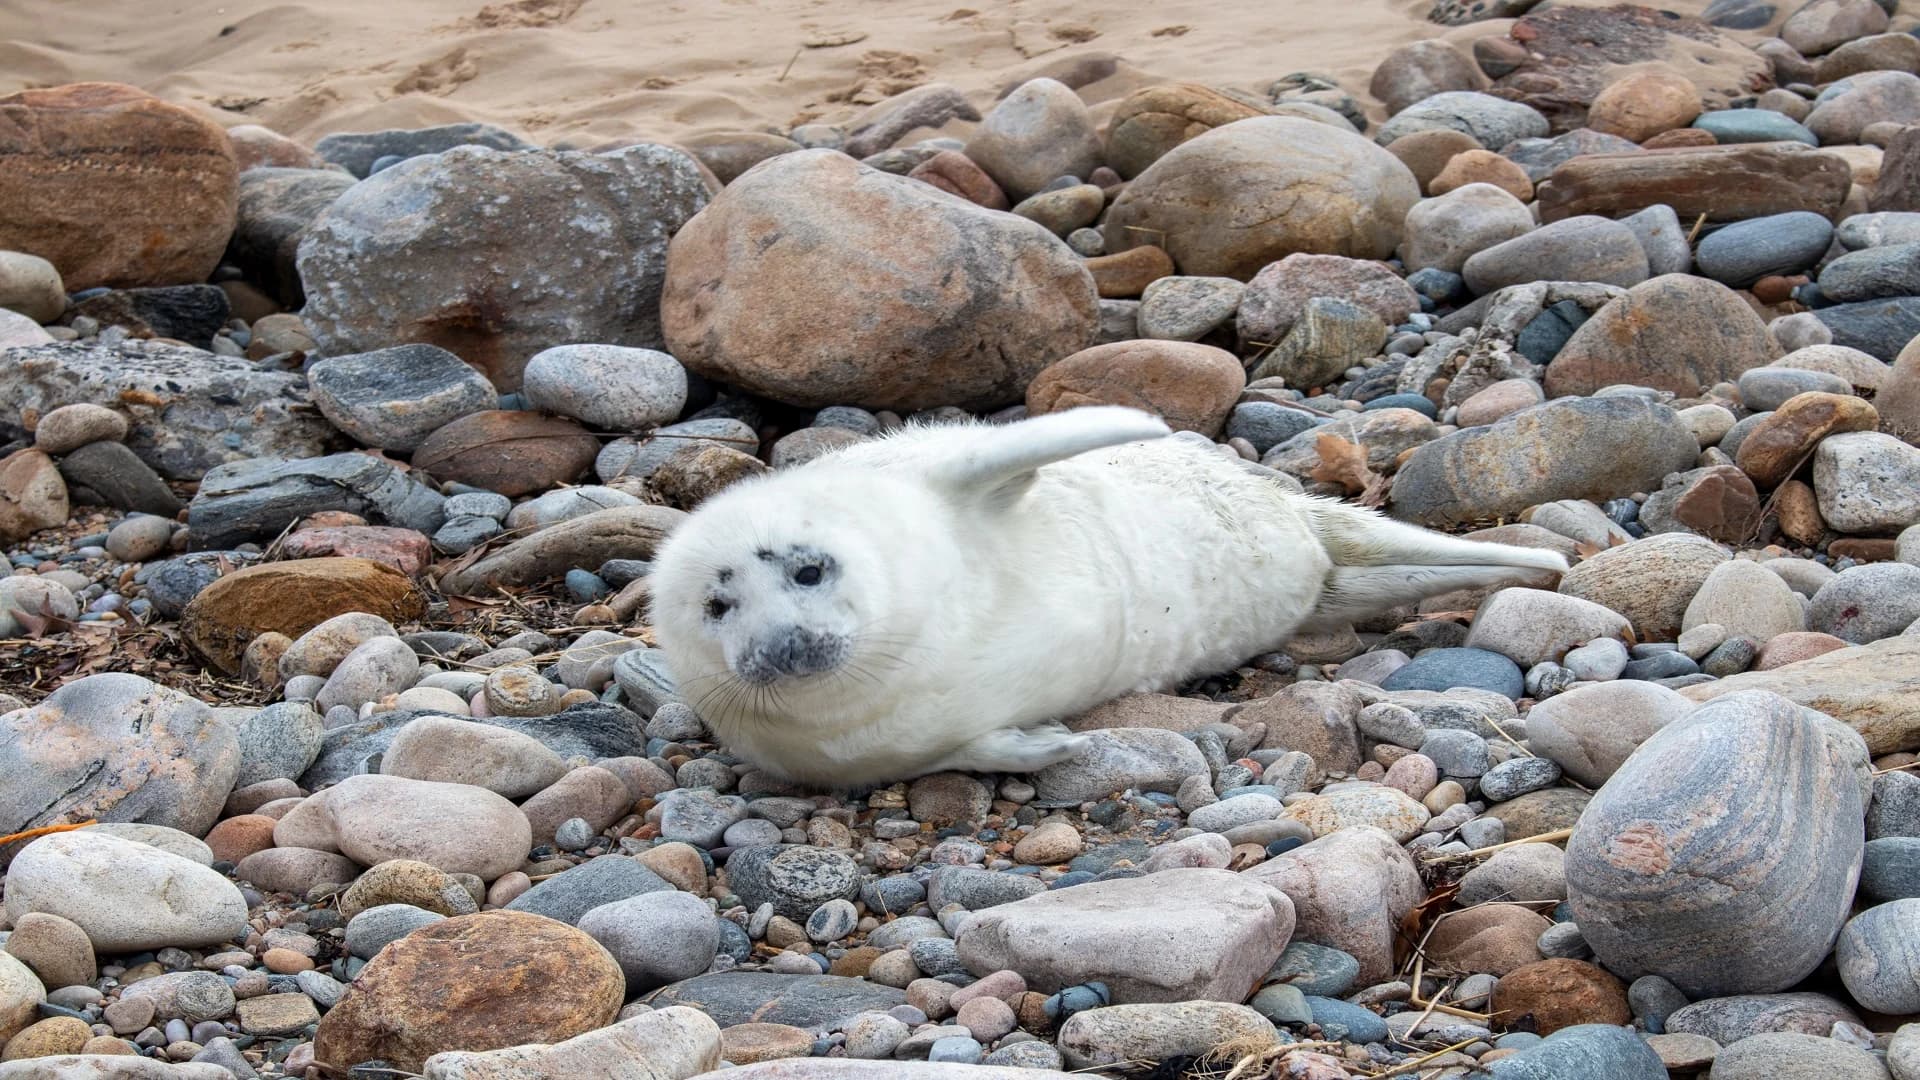 Mystic Aquarium animal rescue team helps safeguard seal pup found on beach